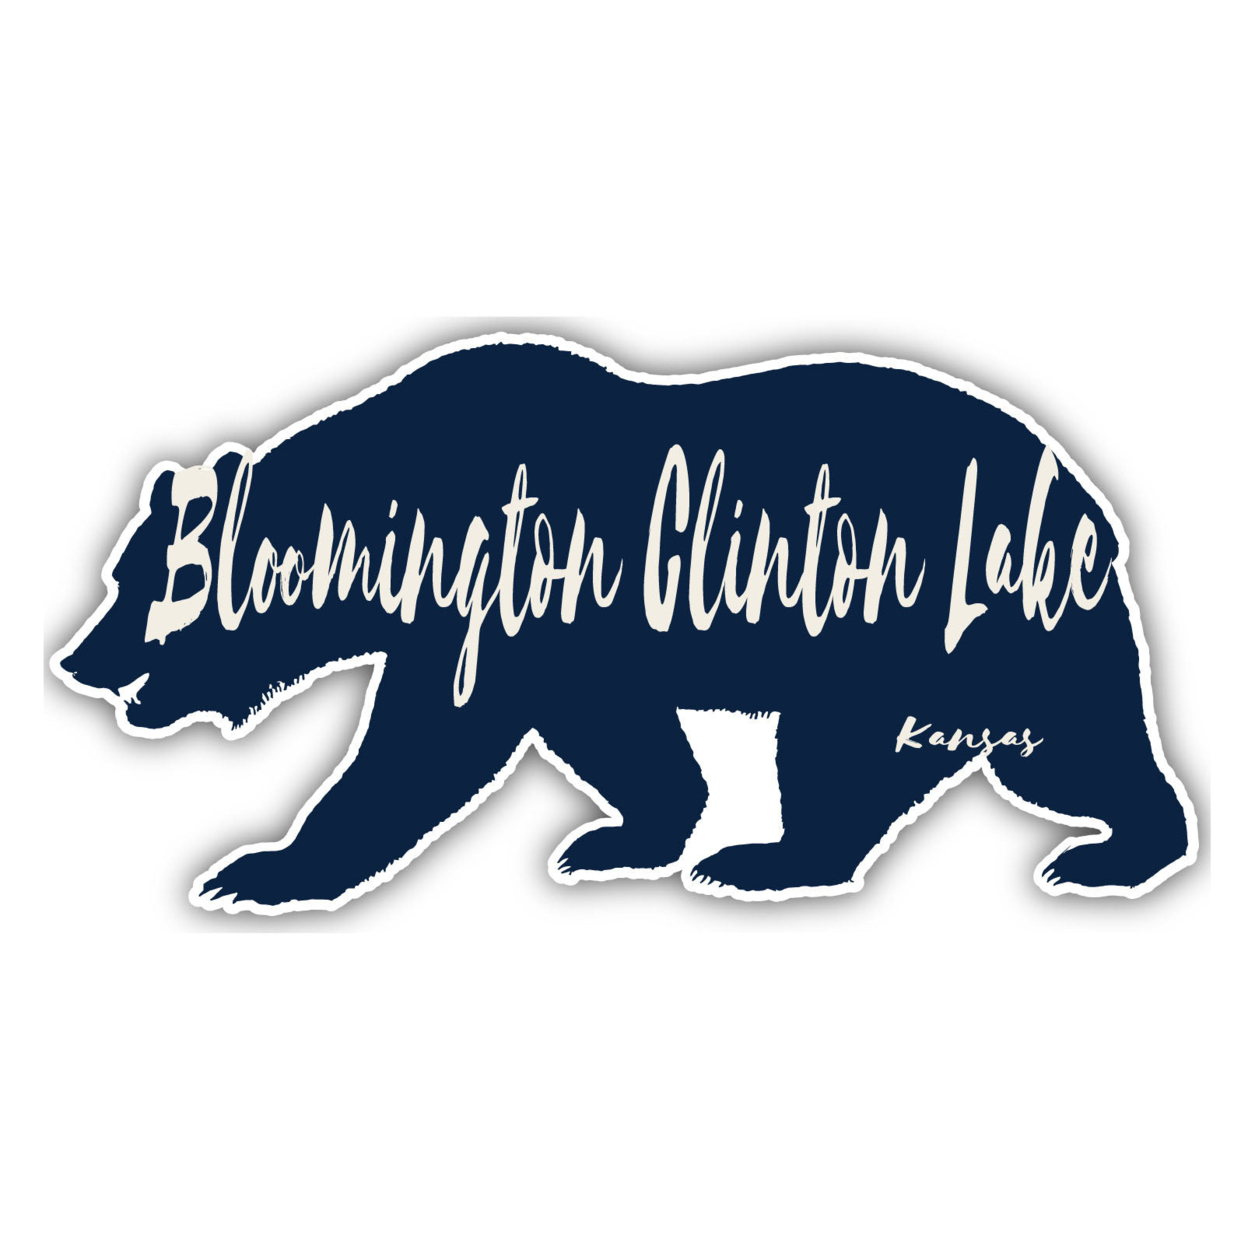 Bloomington Clinton Lake Kansas Souvenir Decorative Stickers (Choose Theme And Size) - Single Unit, 10-Inch, Bear